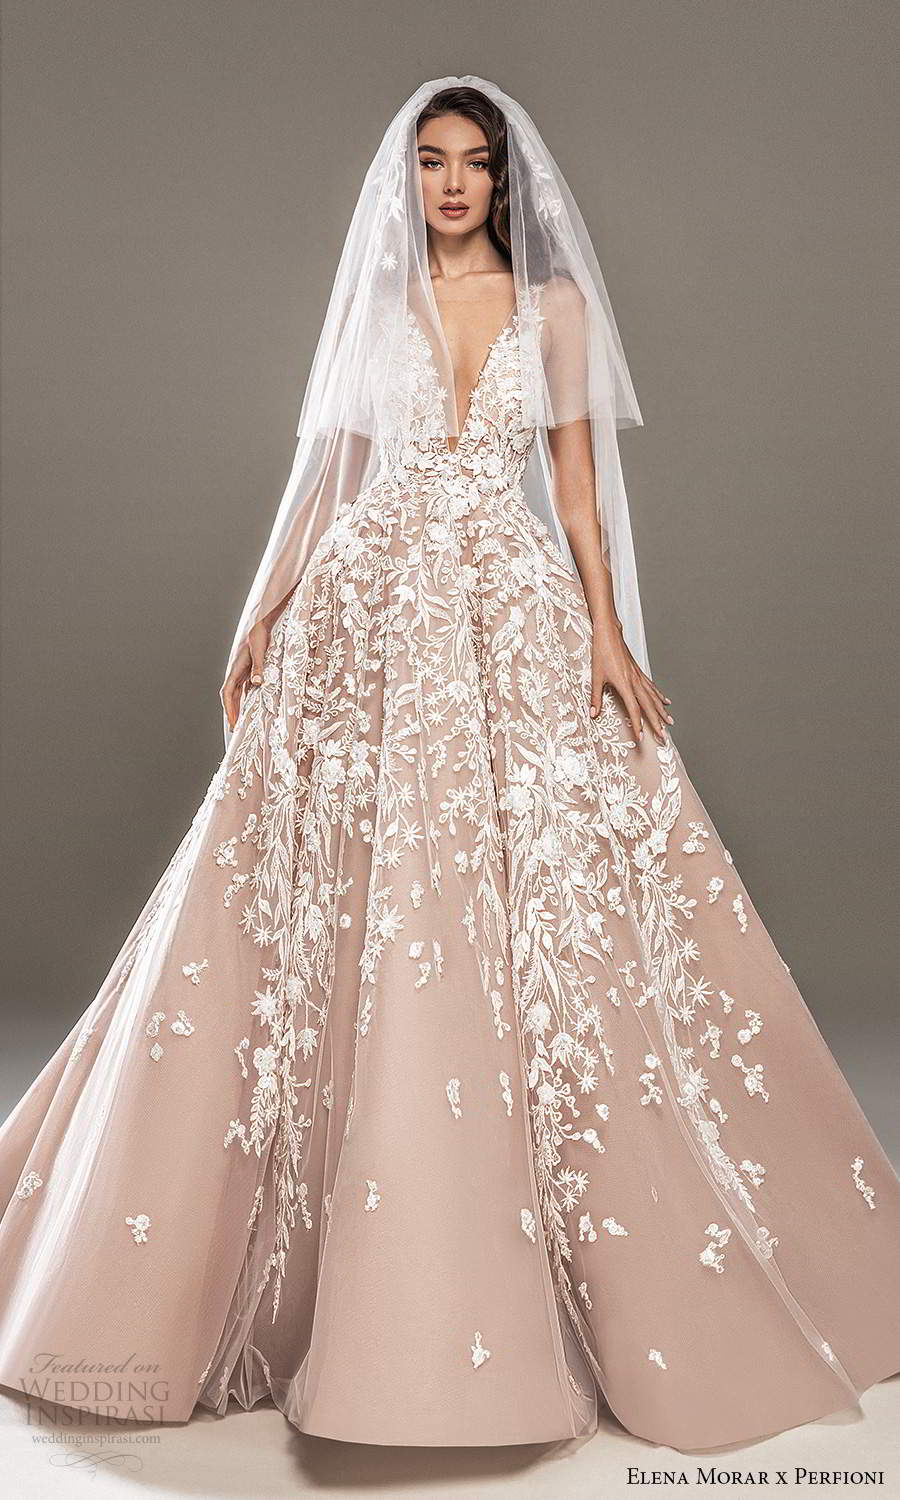 elena morar perfioni 2021 bridal sleeveless straps v neckline fully embellished a line ball gown wedding dress chapel train blush color (7) mv